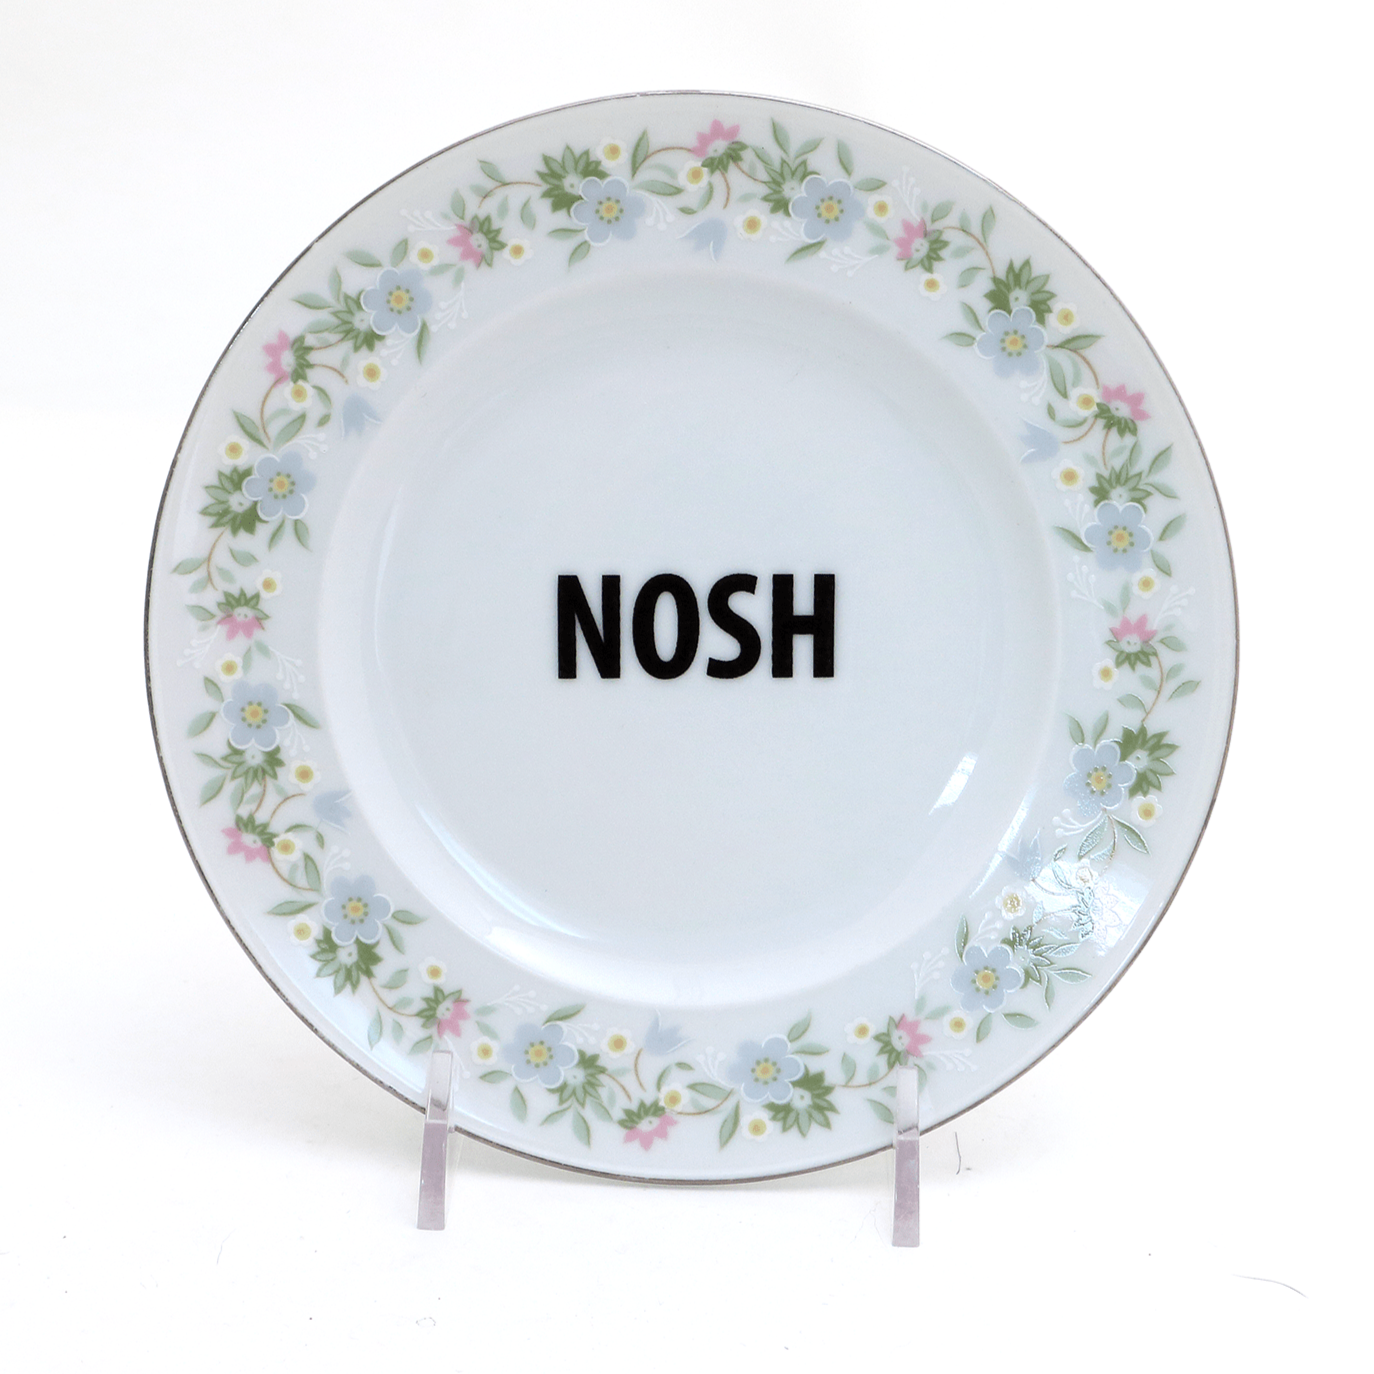 Lenny Mud Dining Plates Vintage Upcycled Nosh Plate